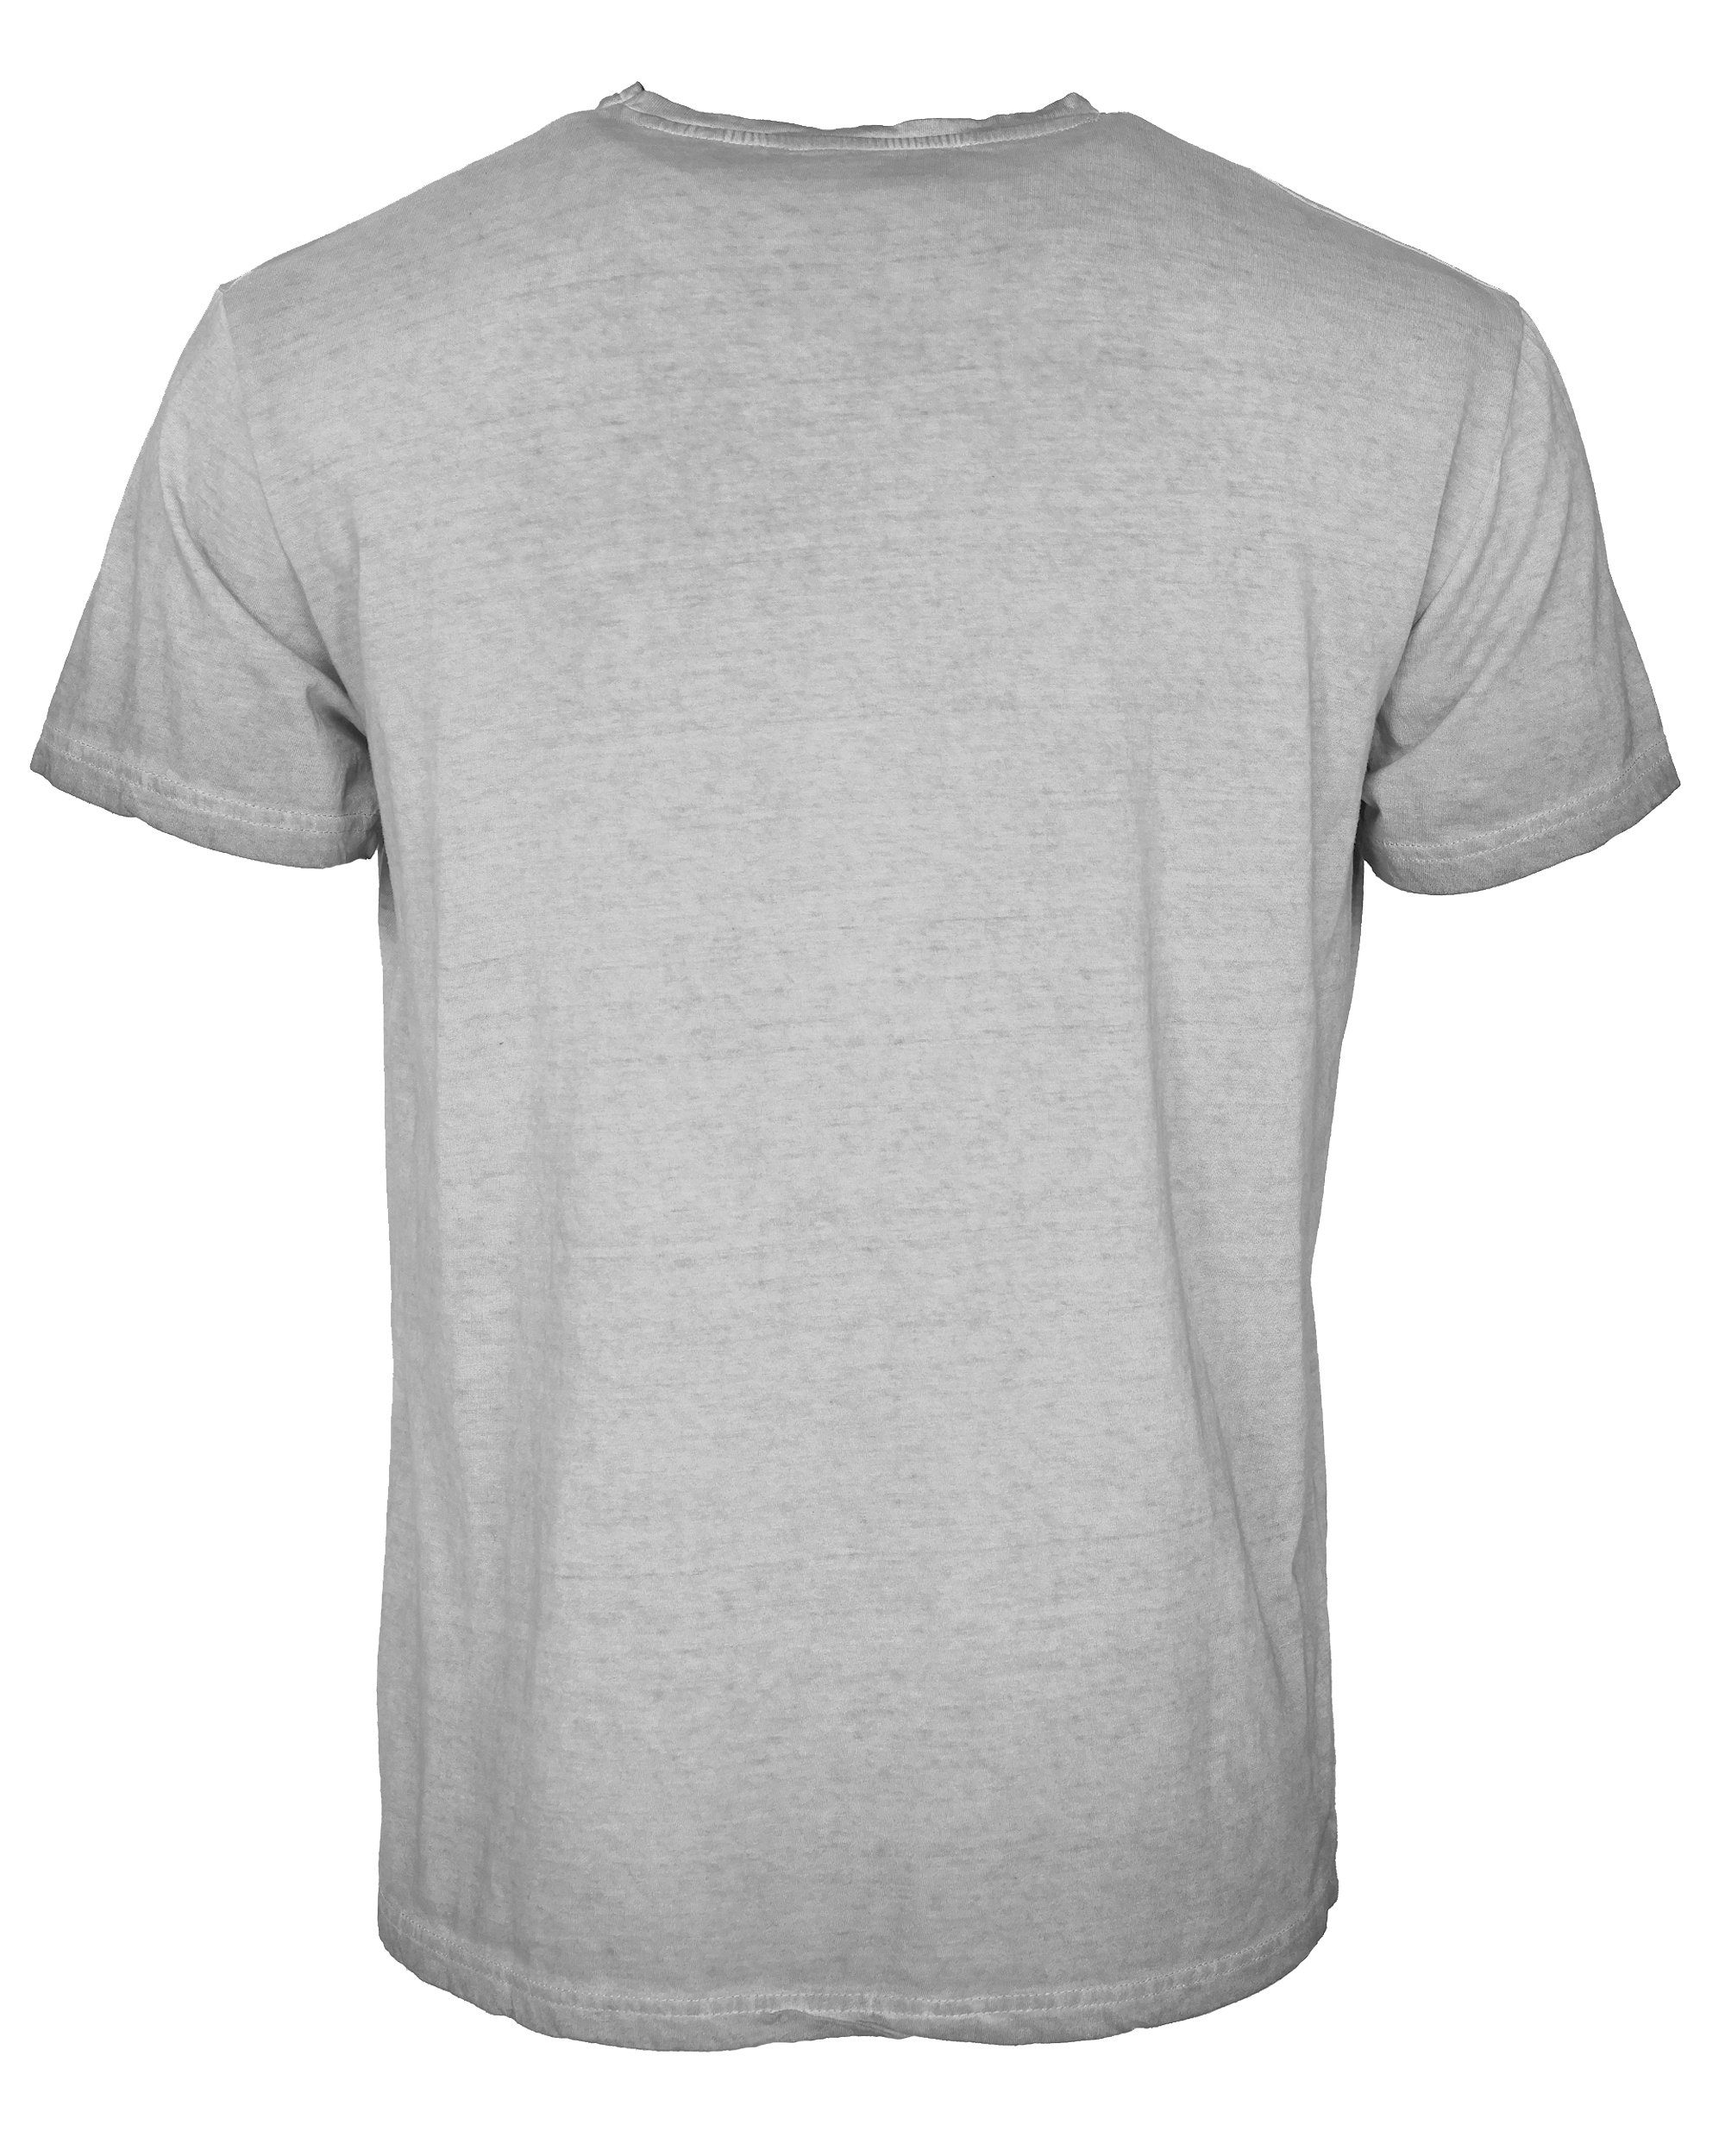 T-Shirt TG20212103 GUN grey light TOP